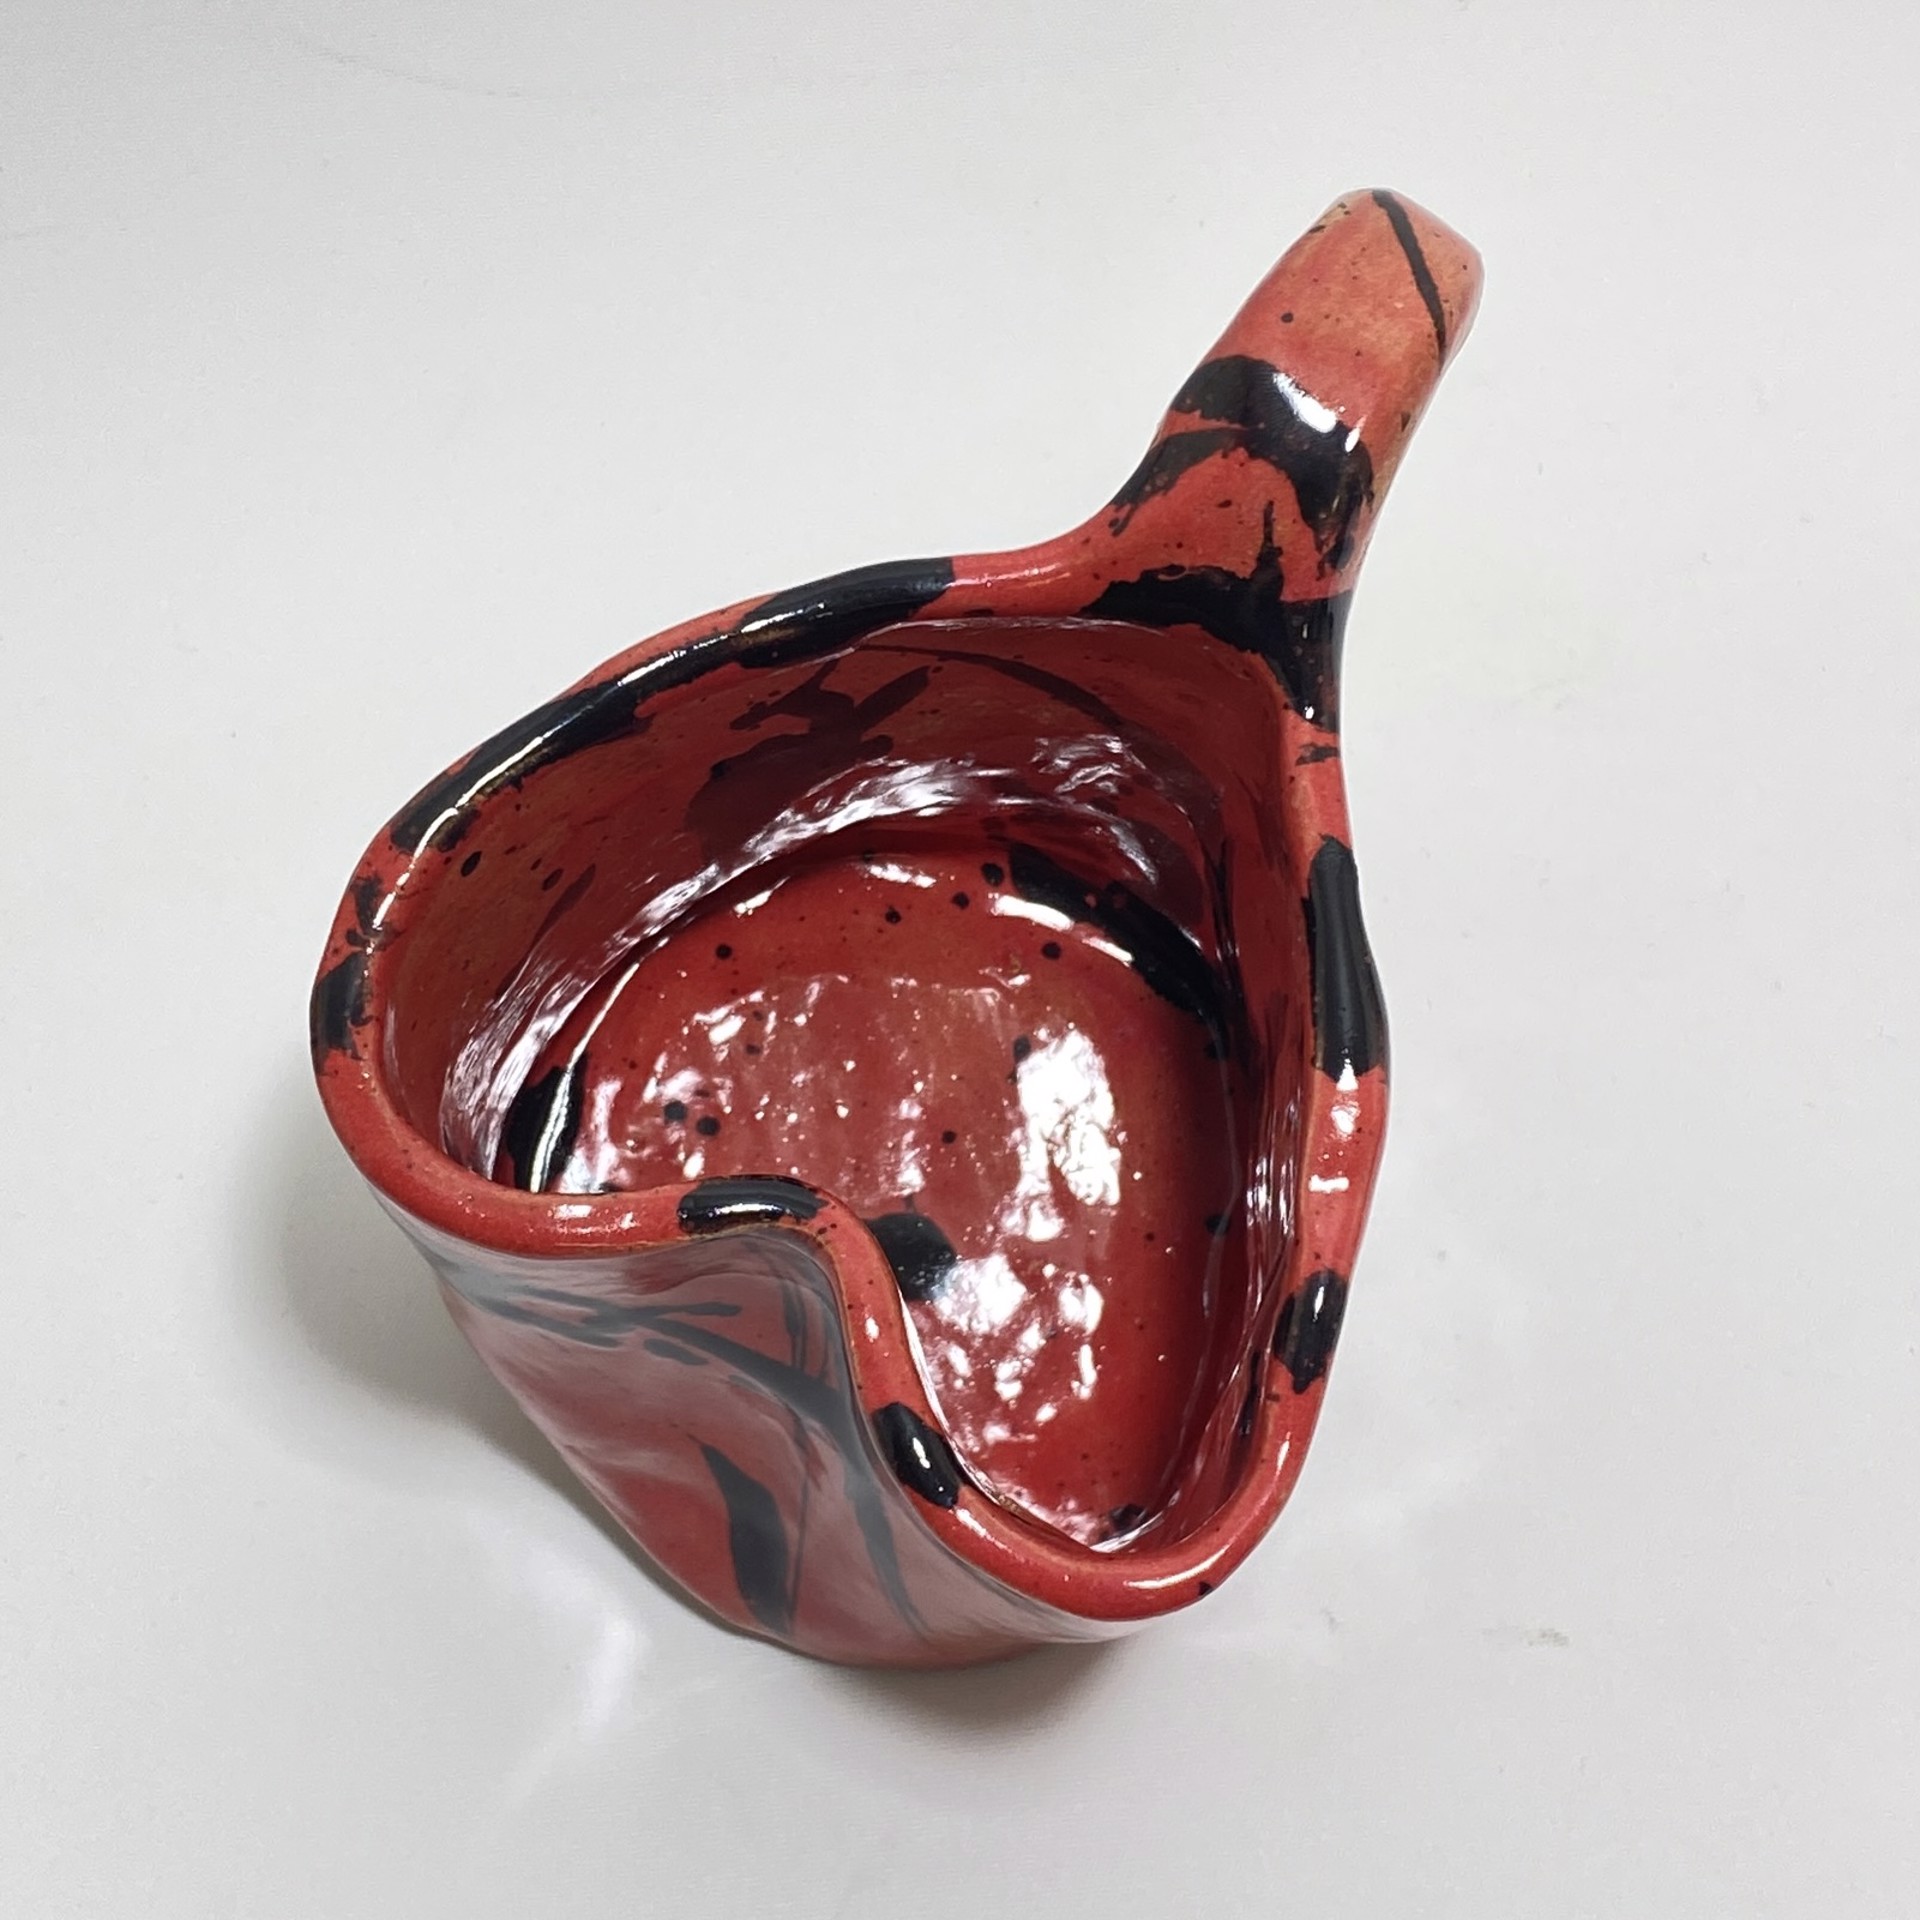 Red Heart Mug by Kristy Bullock